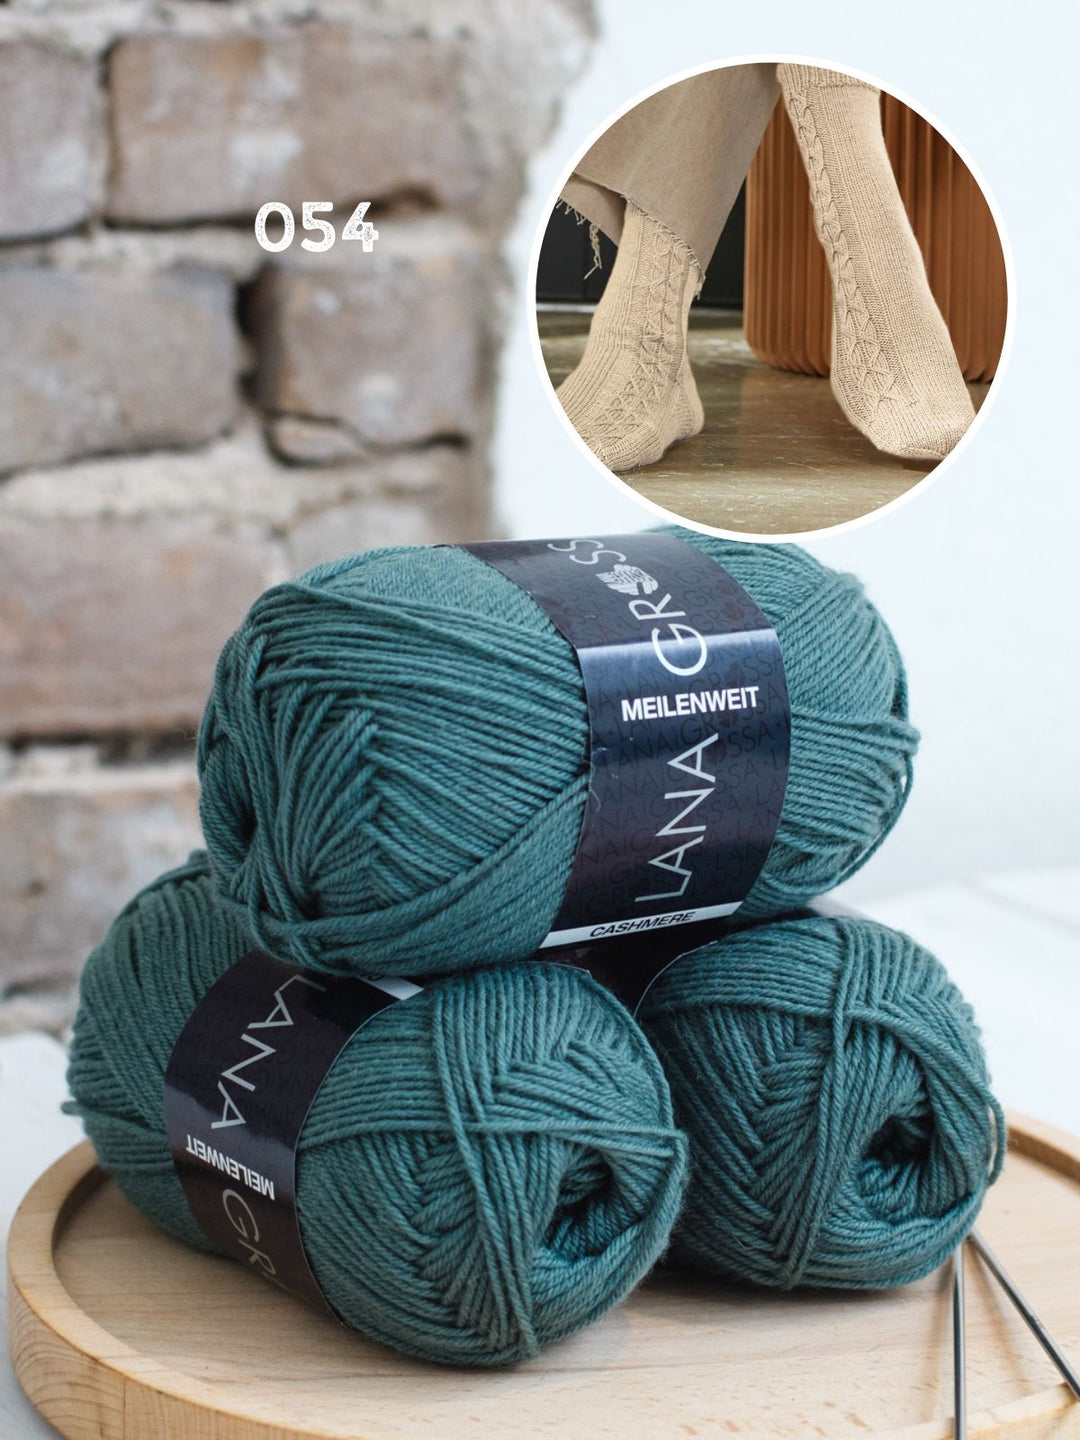 Breipakket Meilenweit 50 Cashmere sokken met kabelpatroon